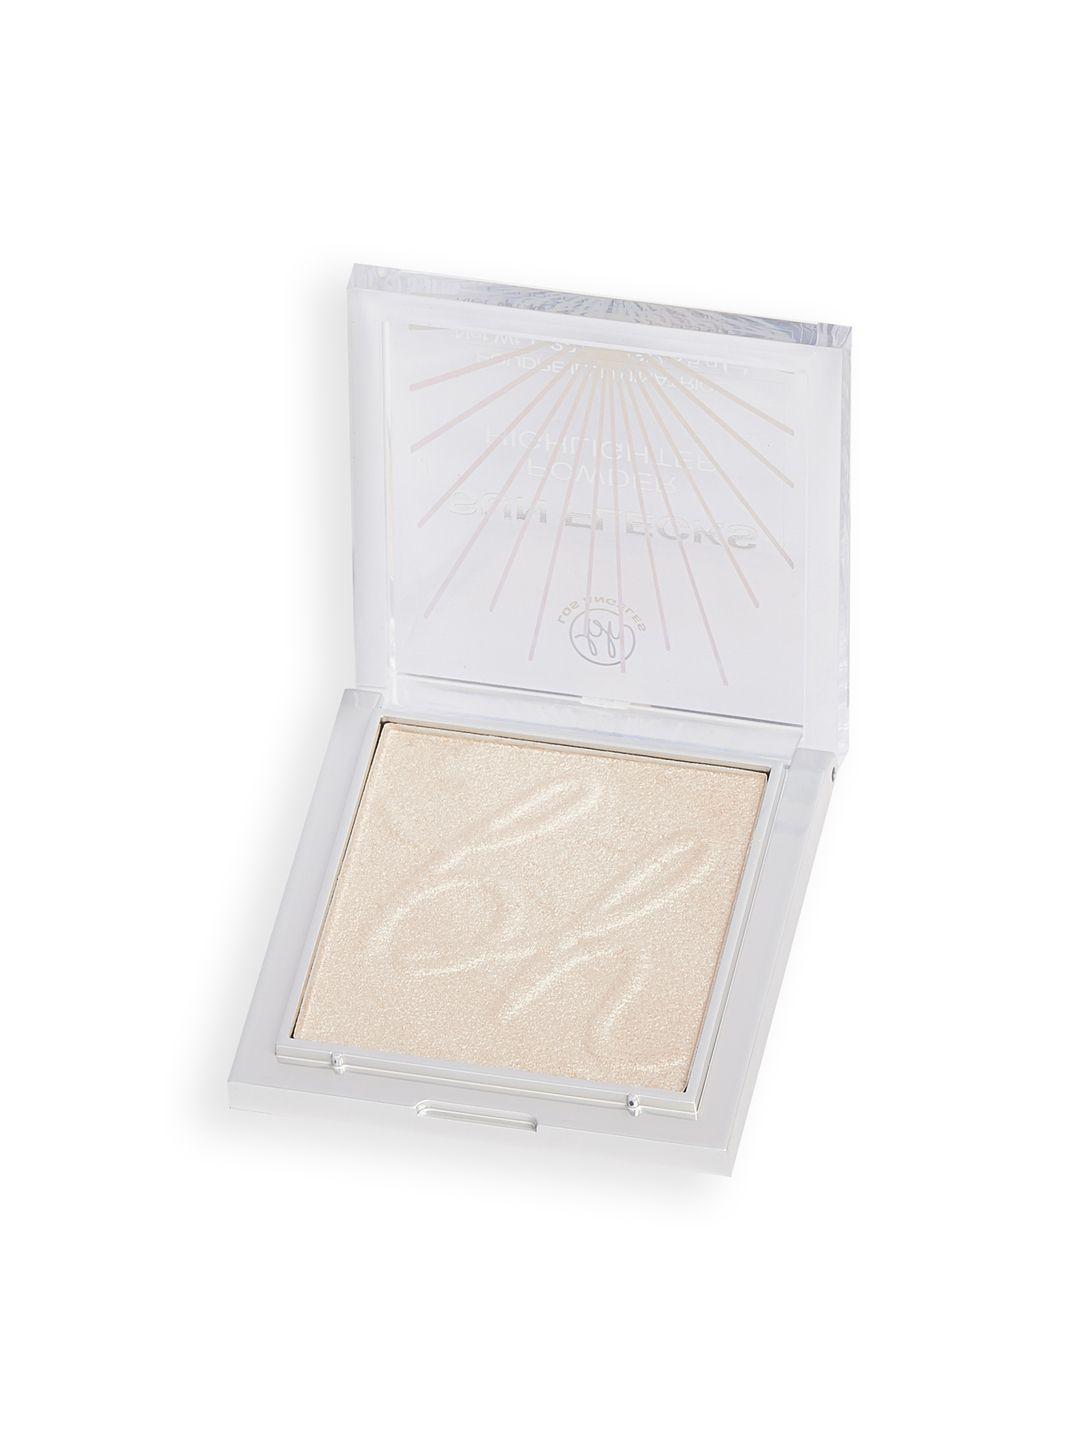 bh cosmetics los angeles sun flecks lightweight & soft powder highlighter 6.5g - bel air